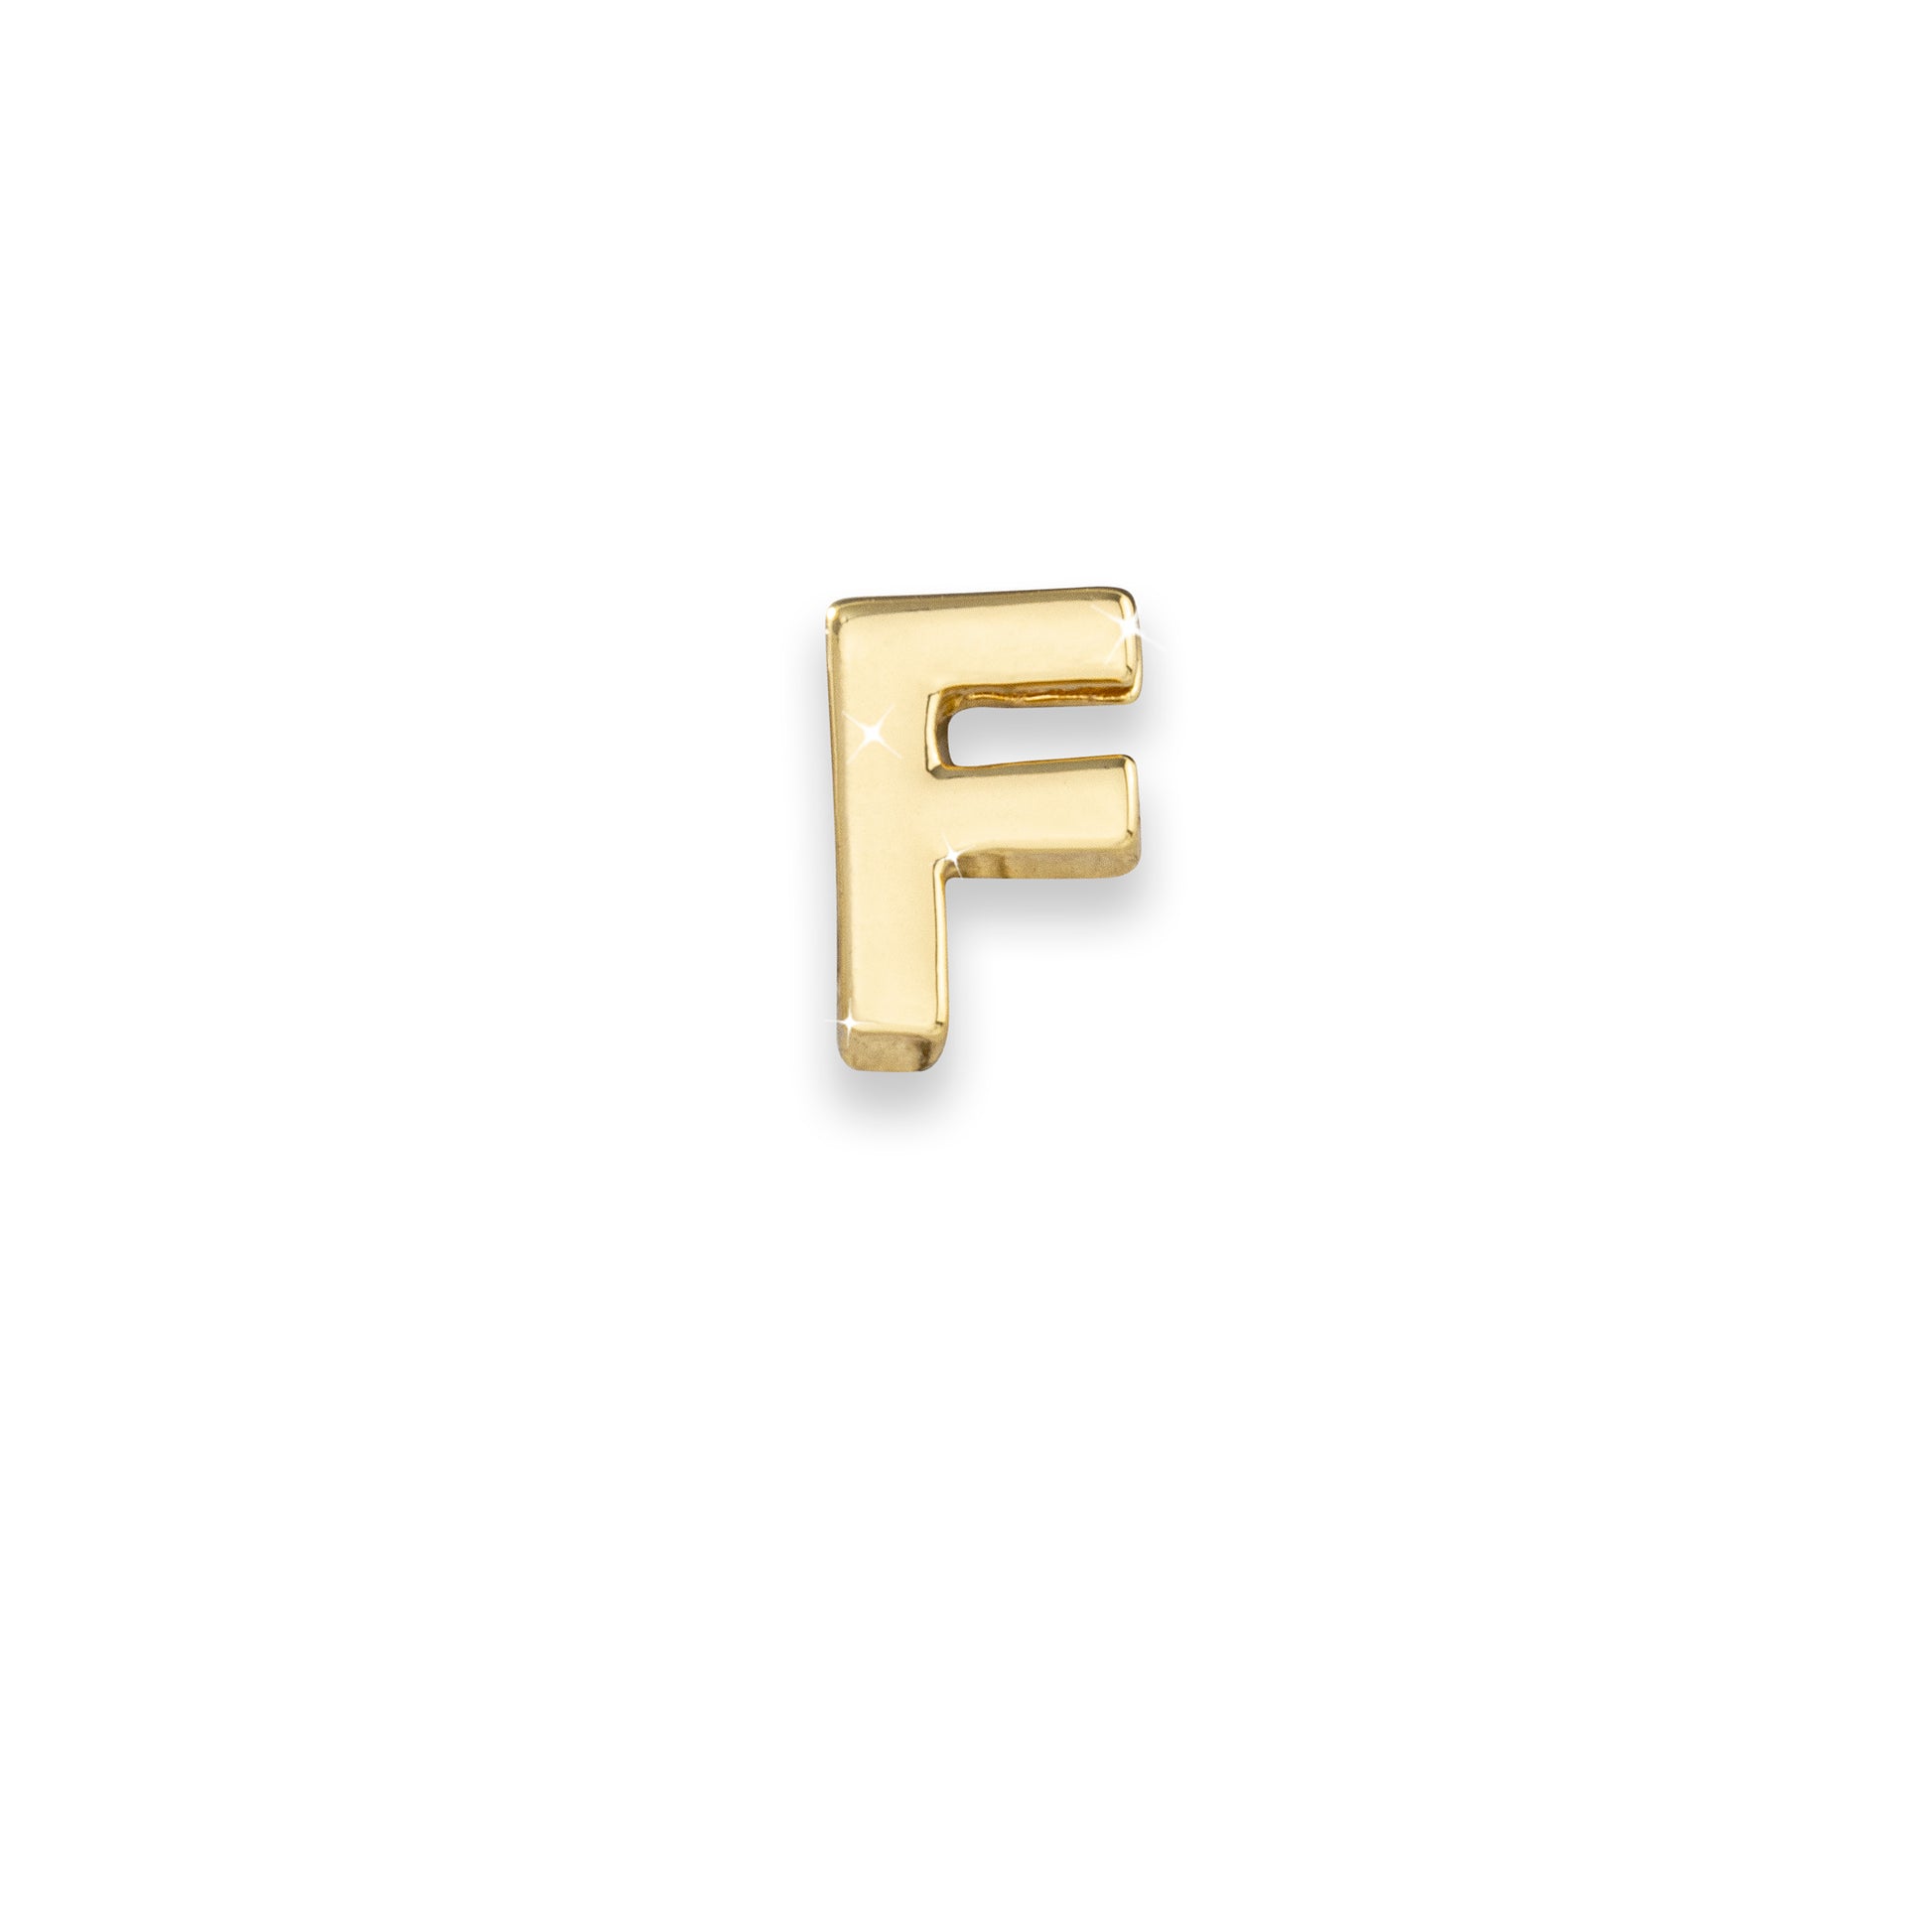 Gold letter F monogram charm for necklaces & bracelets